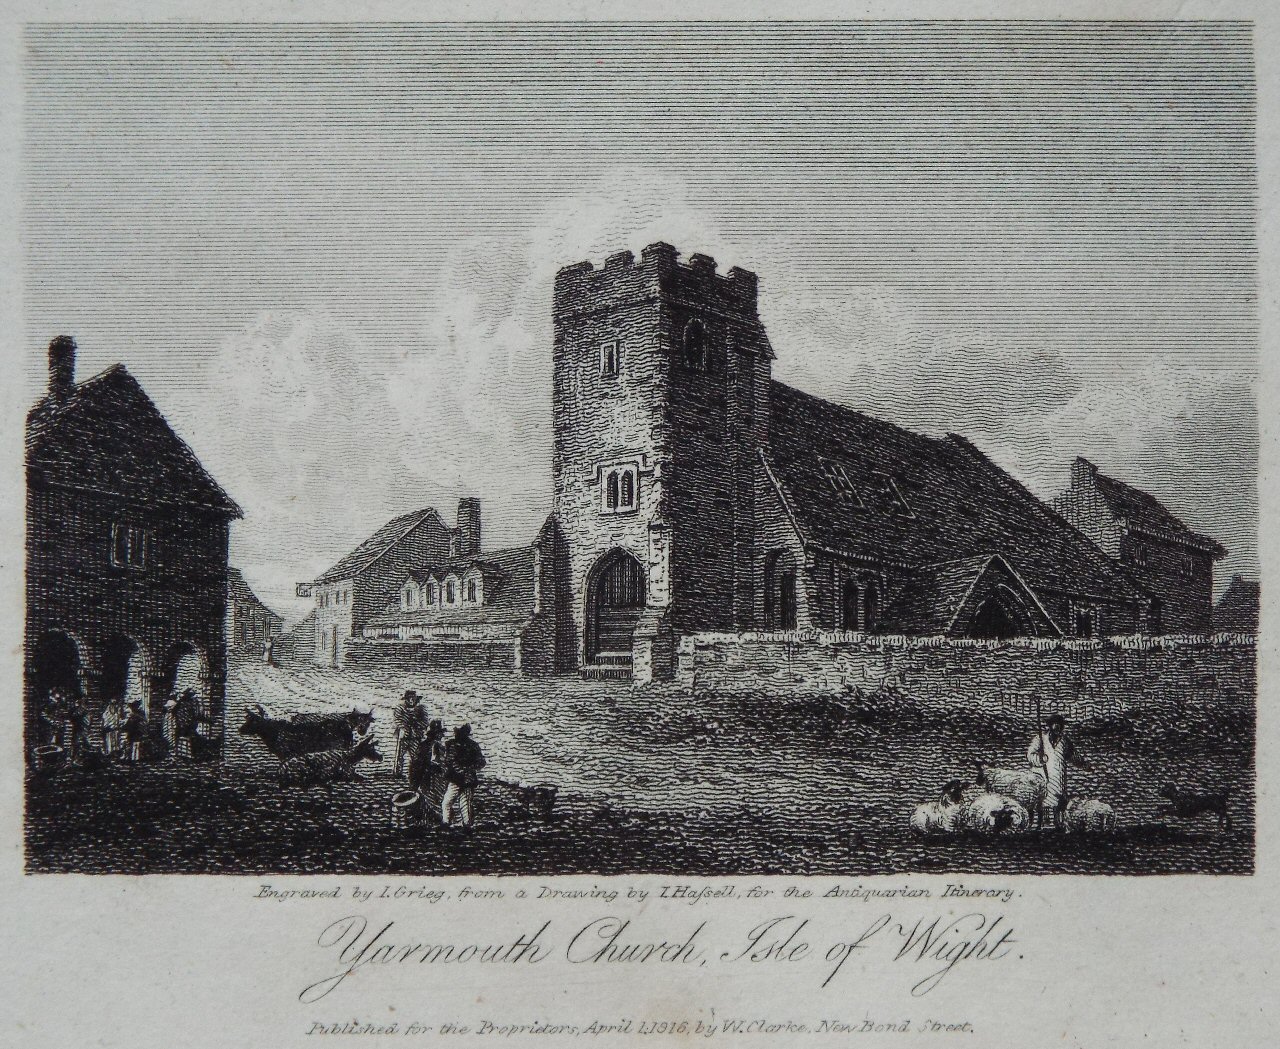 Print - Yarmouth Church, Isle of Wight. - Greig